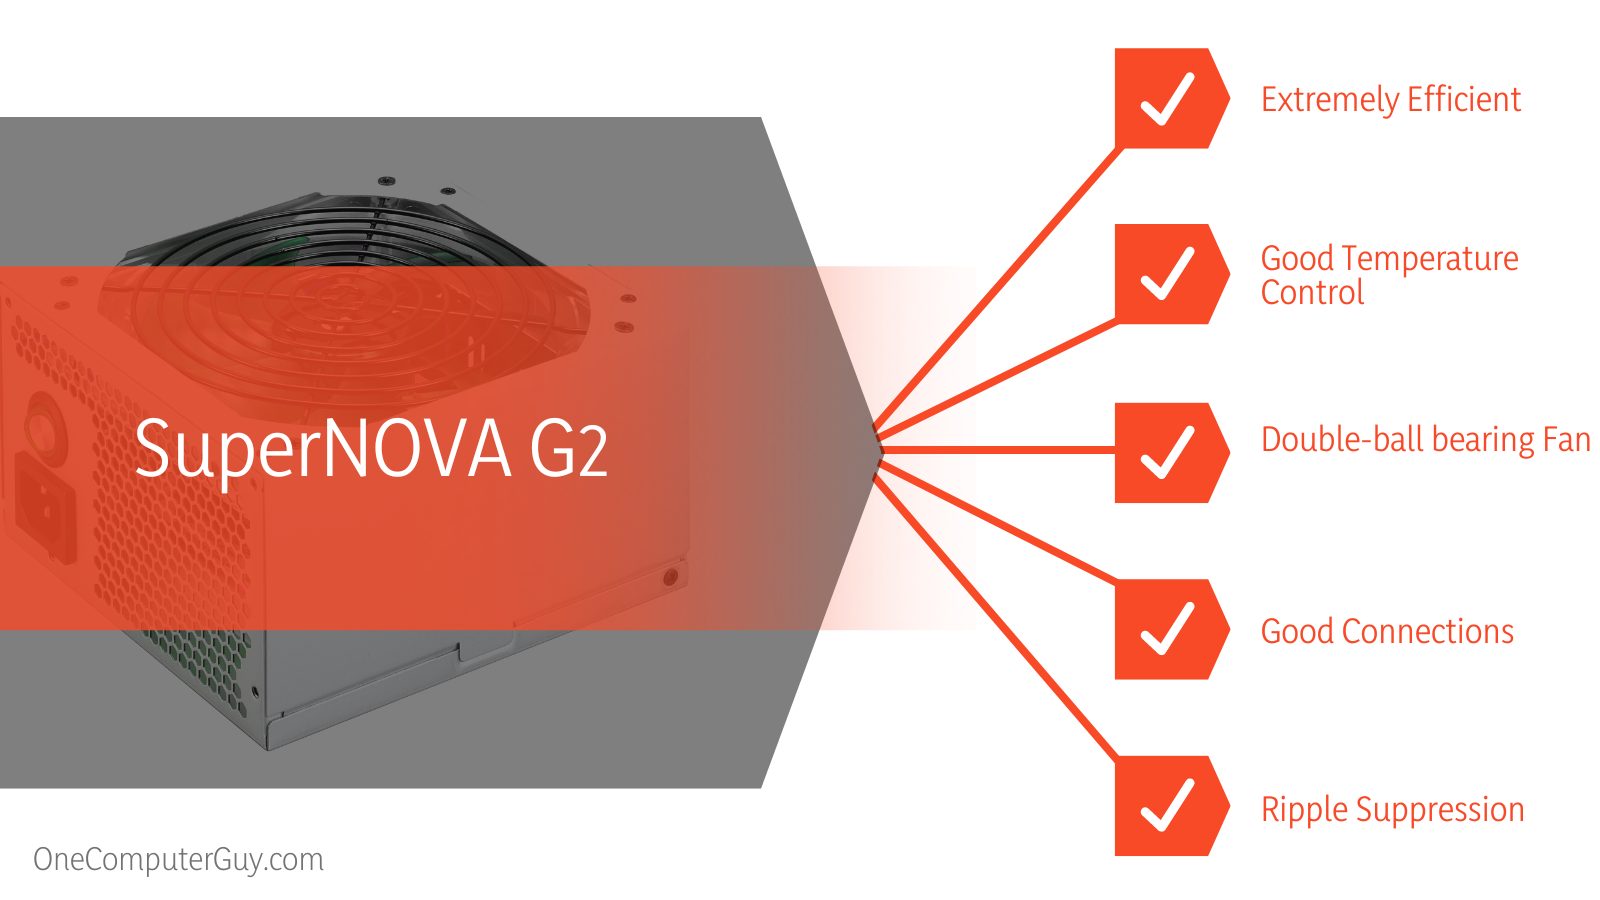 EVGA SuperNOVA G2 vs G3 Features